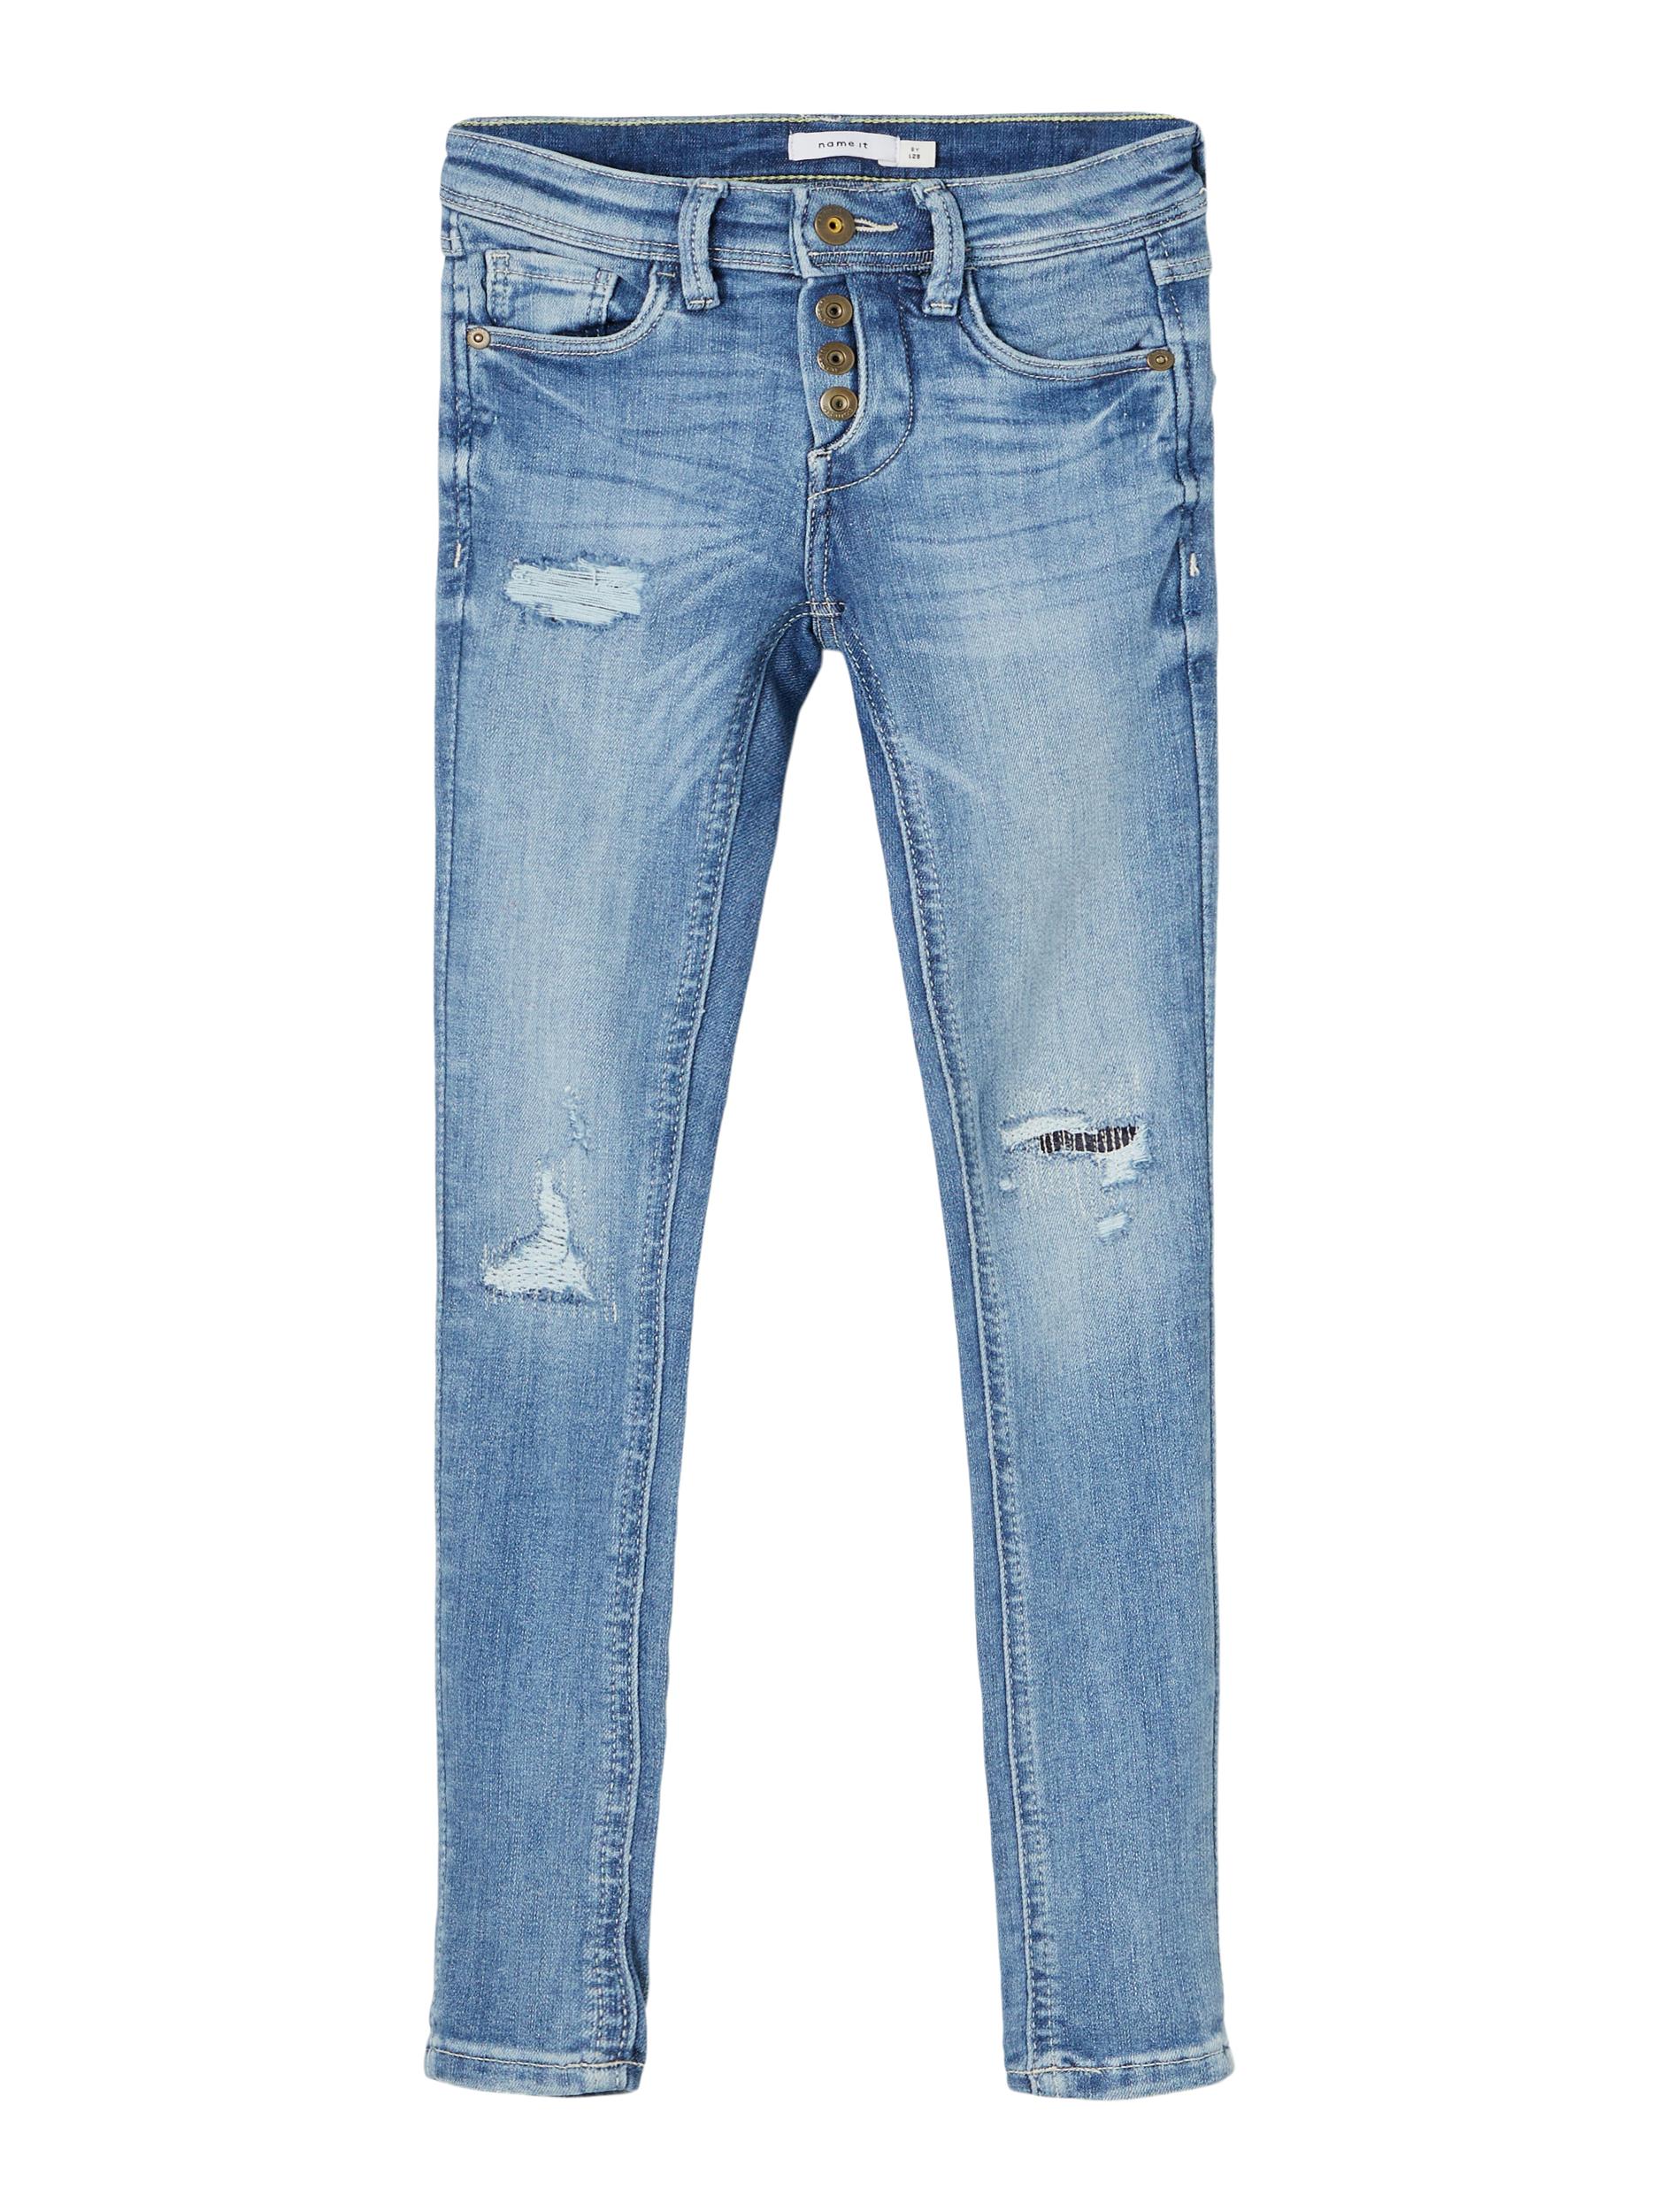 Pete Tartys Jeans, Light Blue Denim, 122 cm